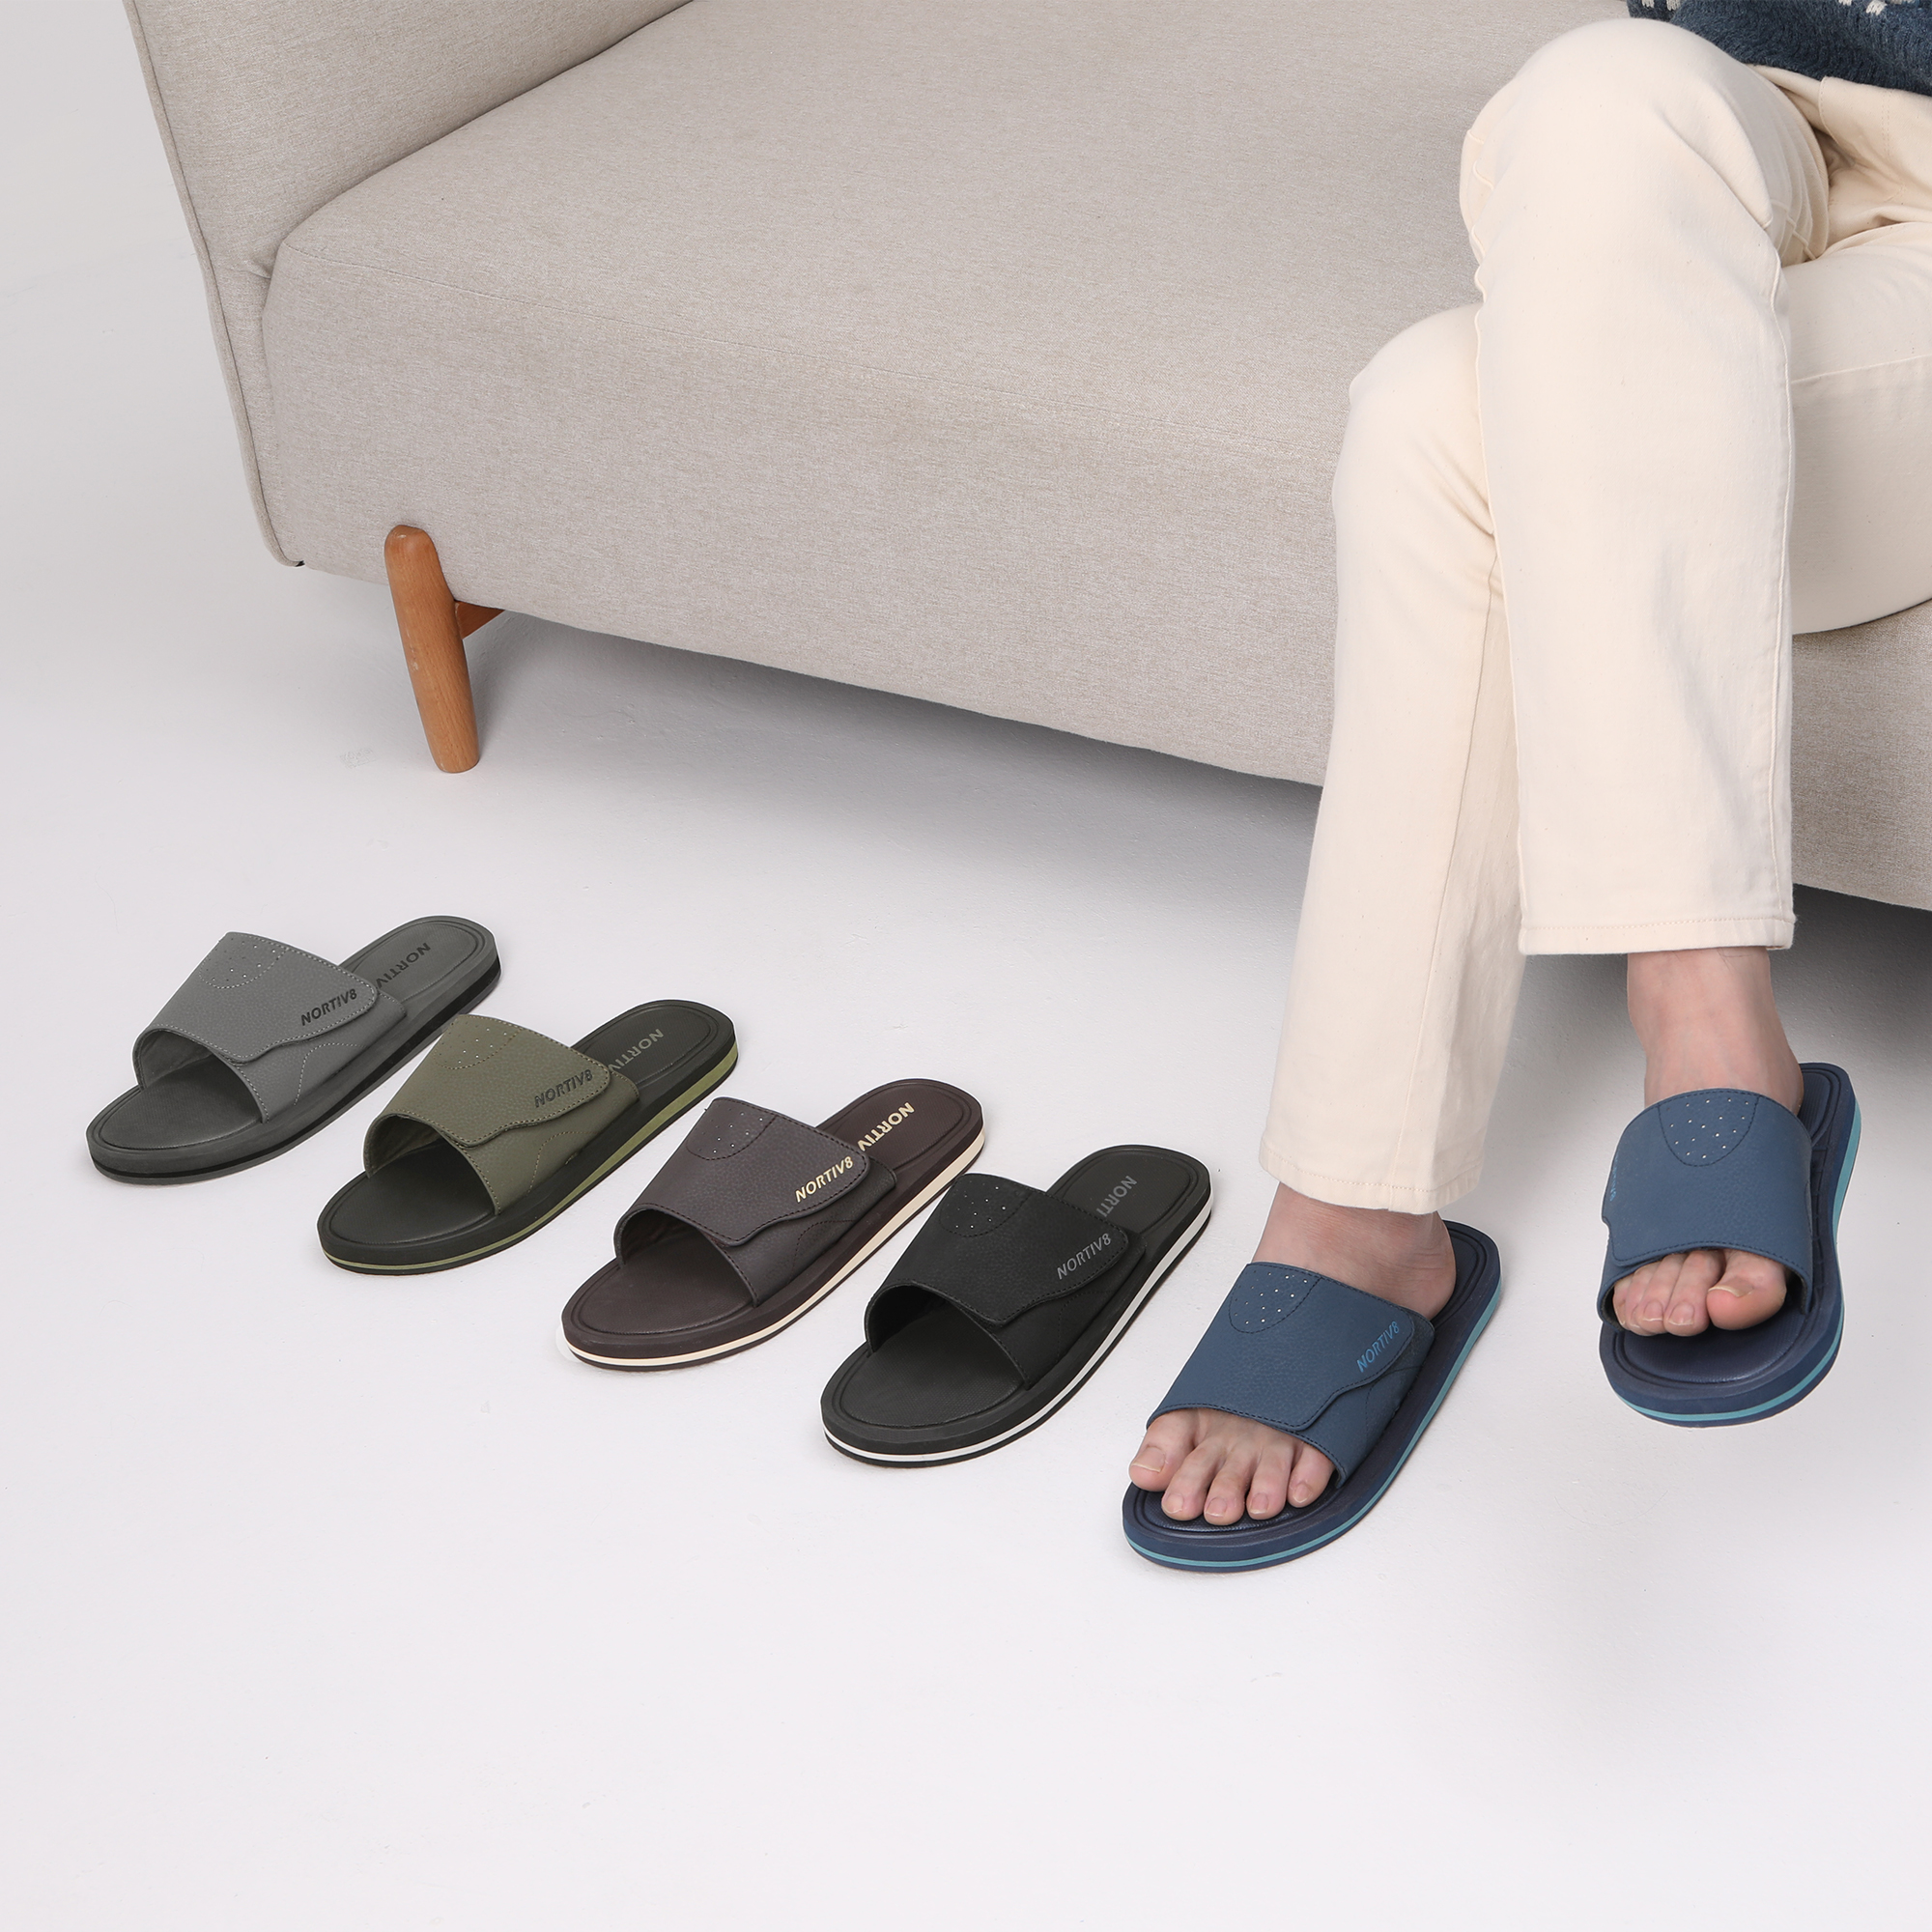 Nortiv8 Men's Memory Foam Adjustable Slide Sandals Comfort Lightweight Summer Beach Sandals Shoes FUSION BLACK Size 10 - image 4 of 5